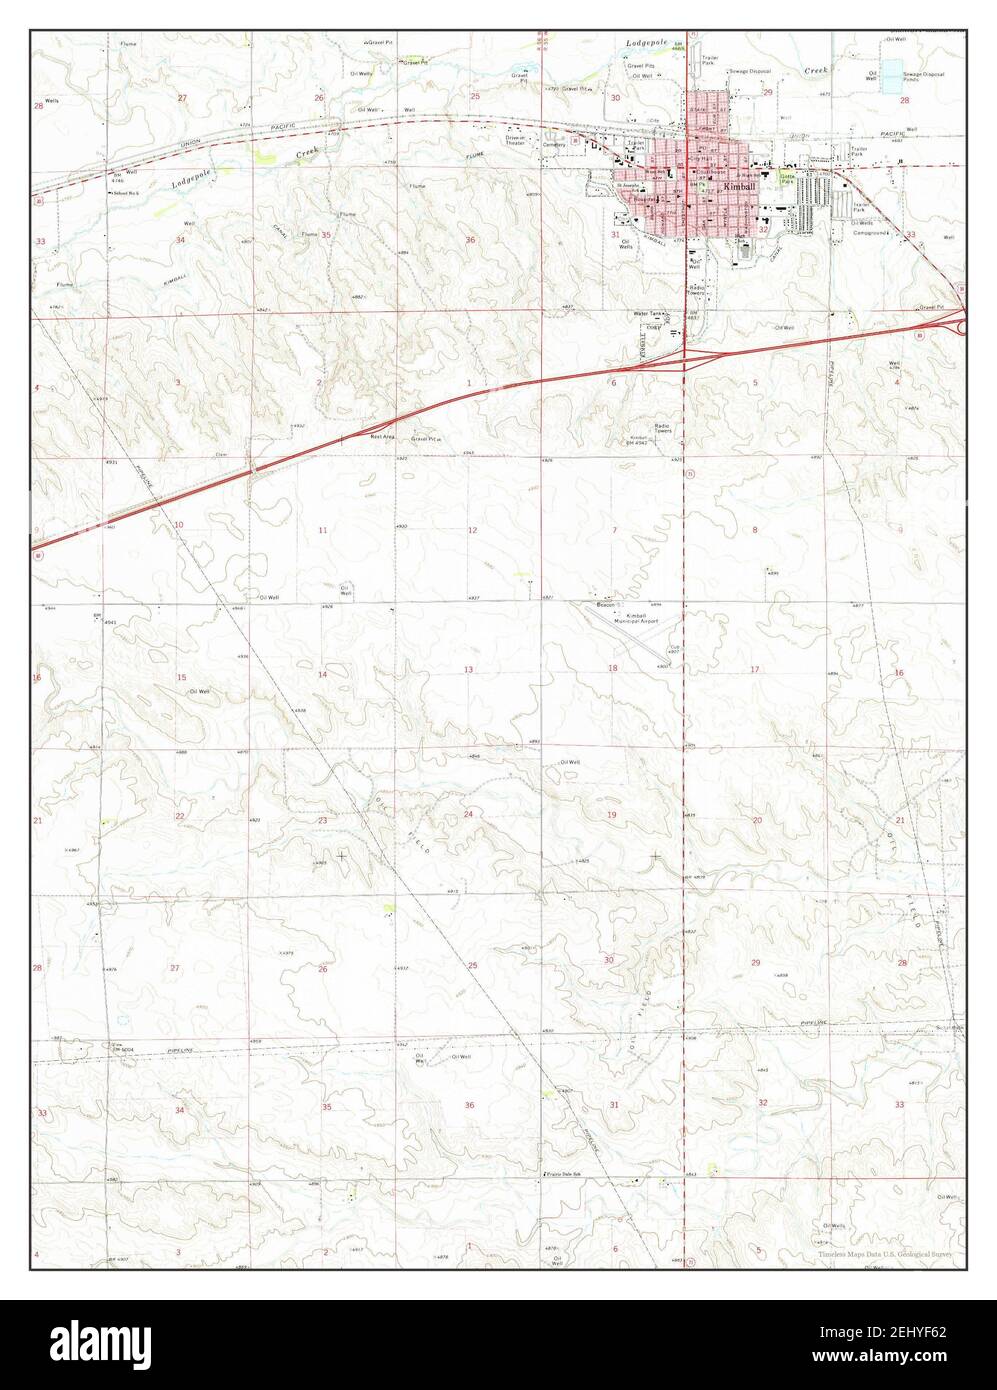 Kimball, Nebraska, map 1972, 1:24000, United States of America by Timeless Maps, data U.S. Geological Survey Stock Photo